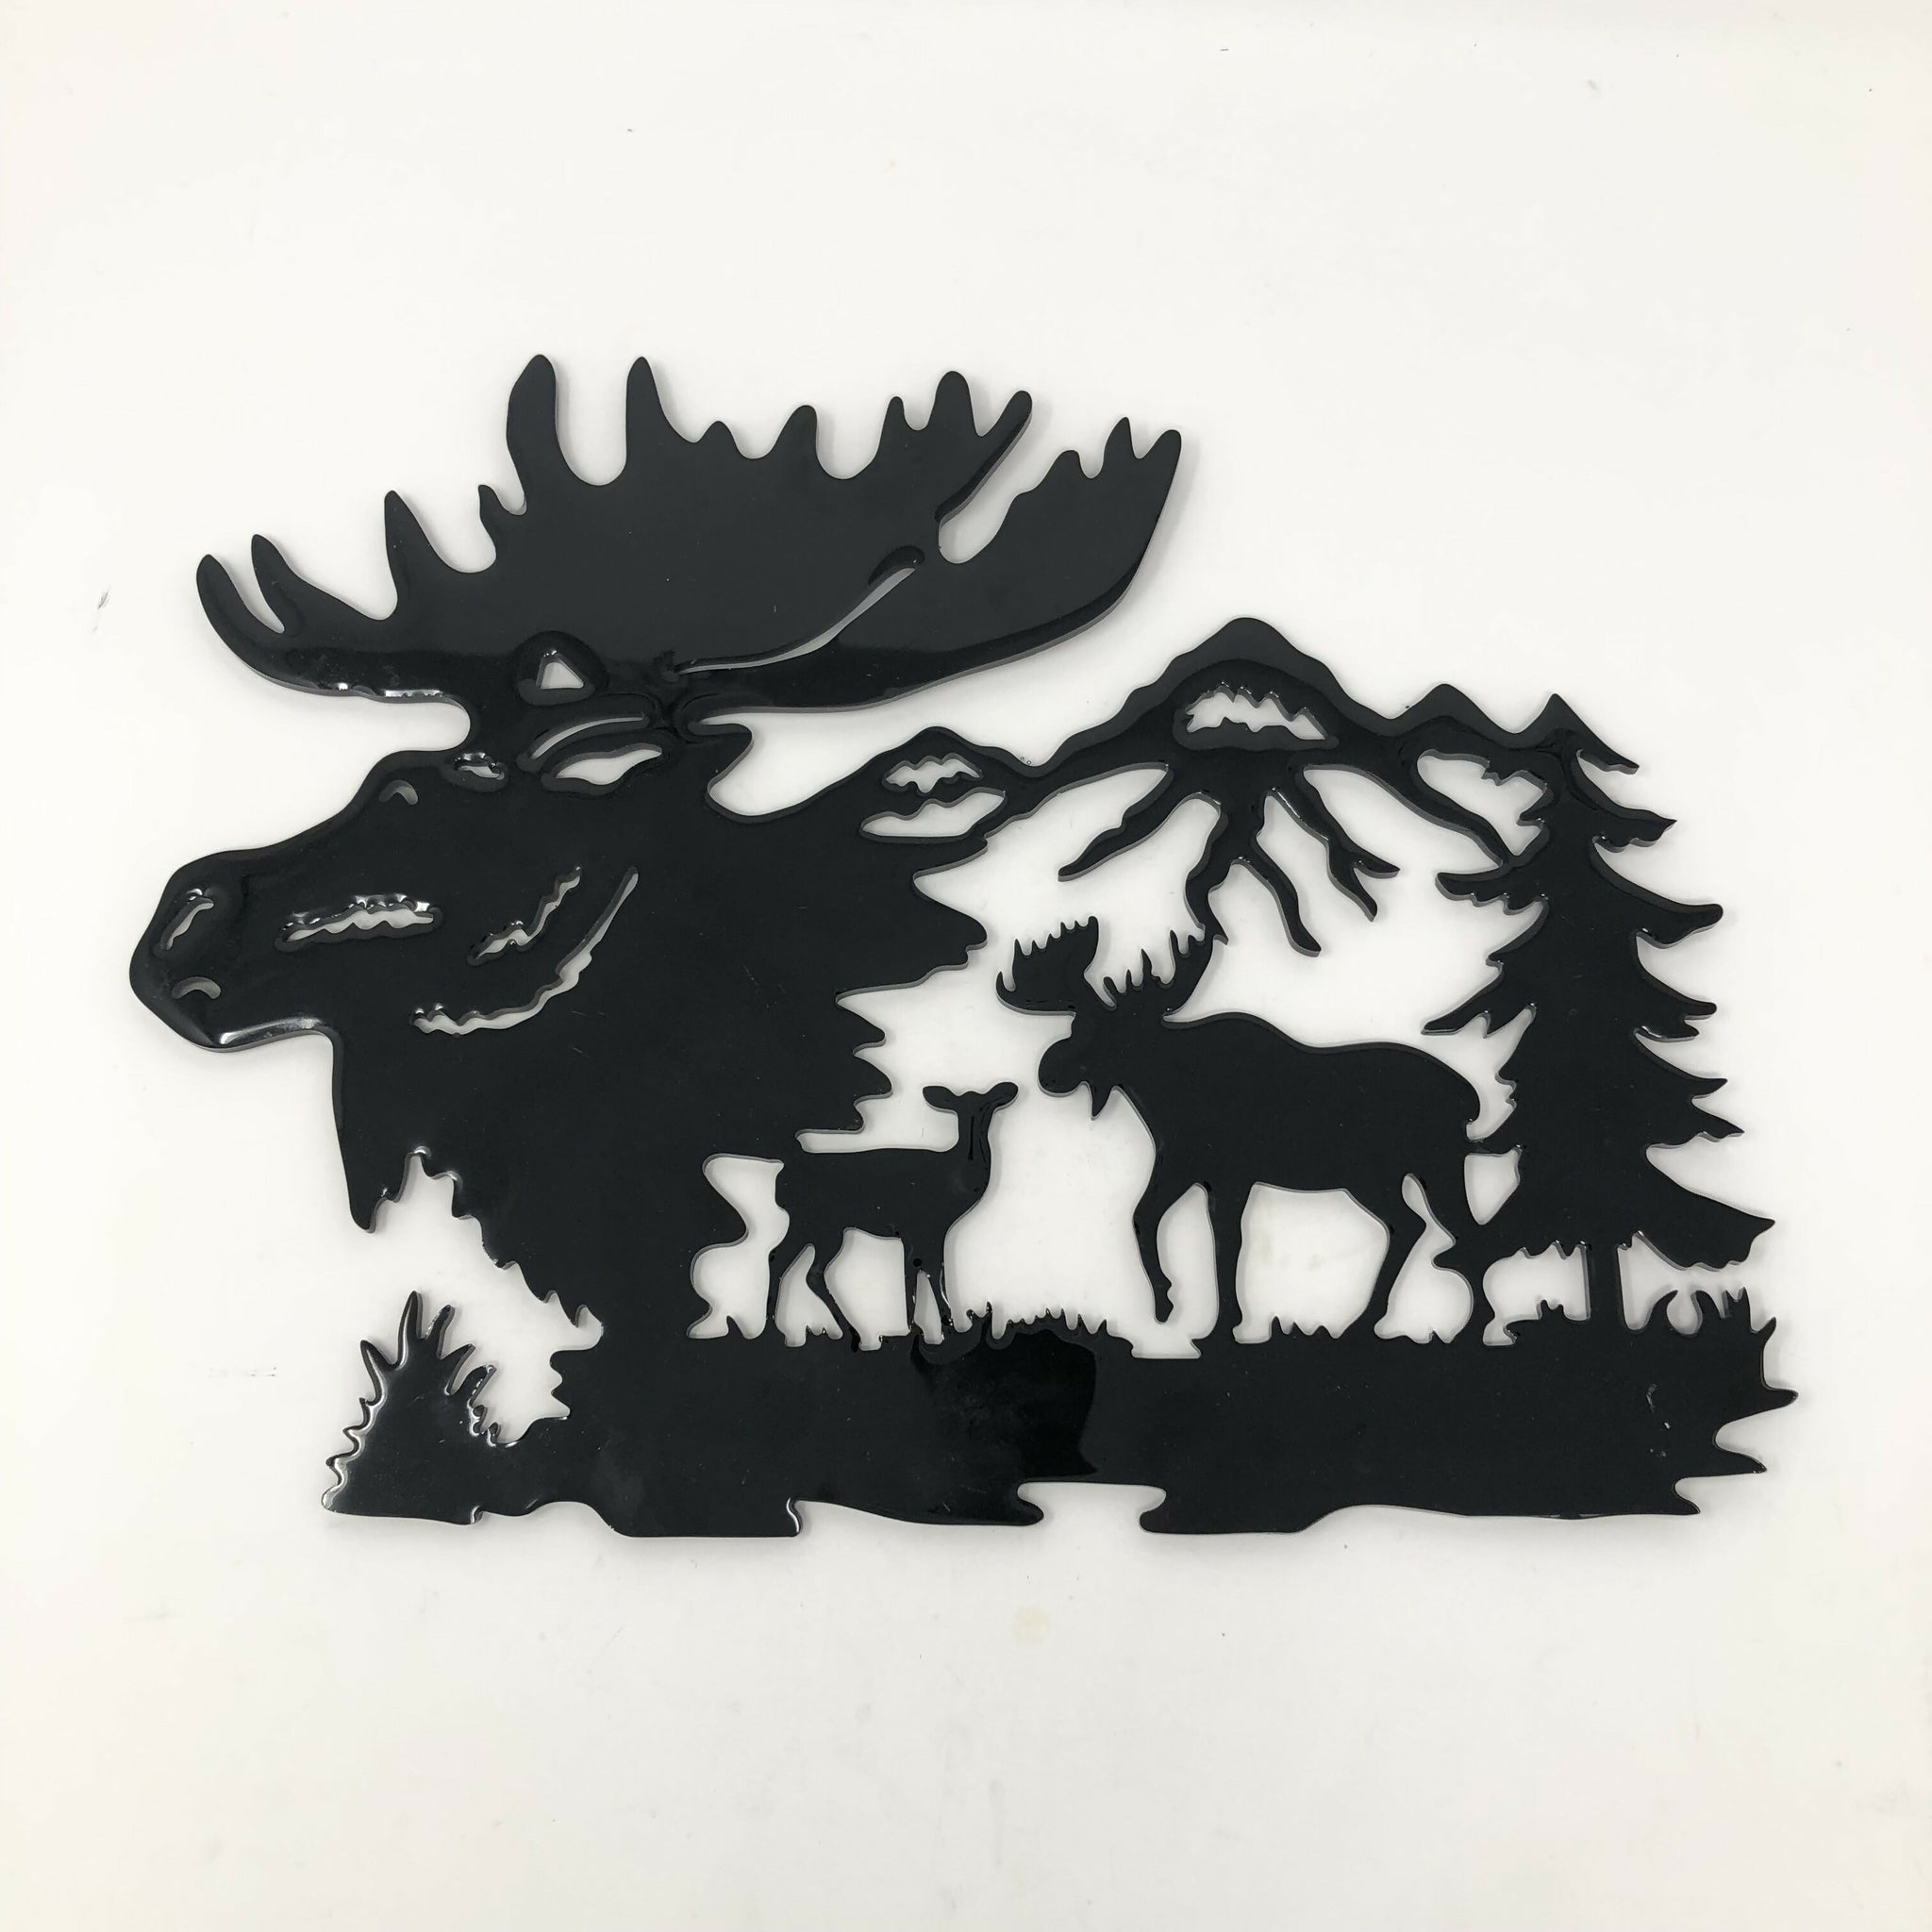 Moose Silhouette